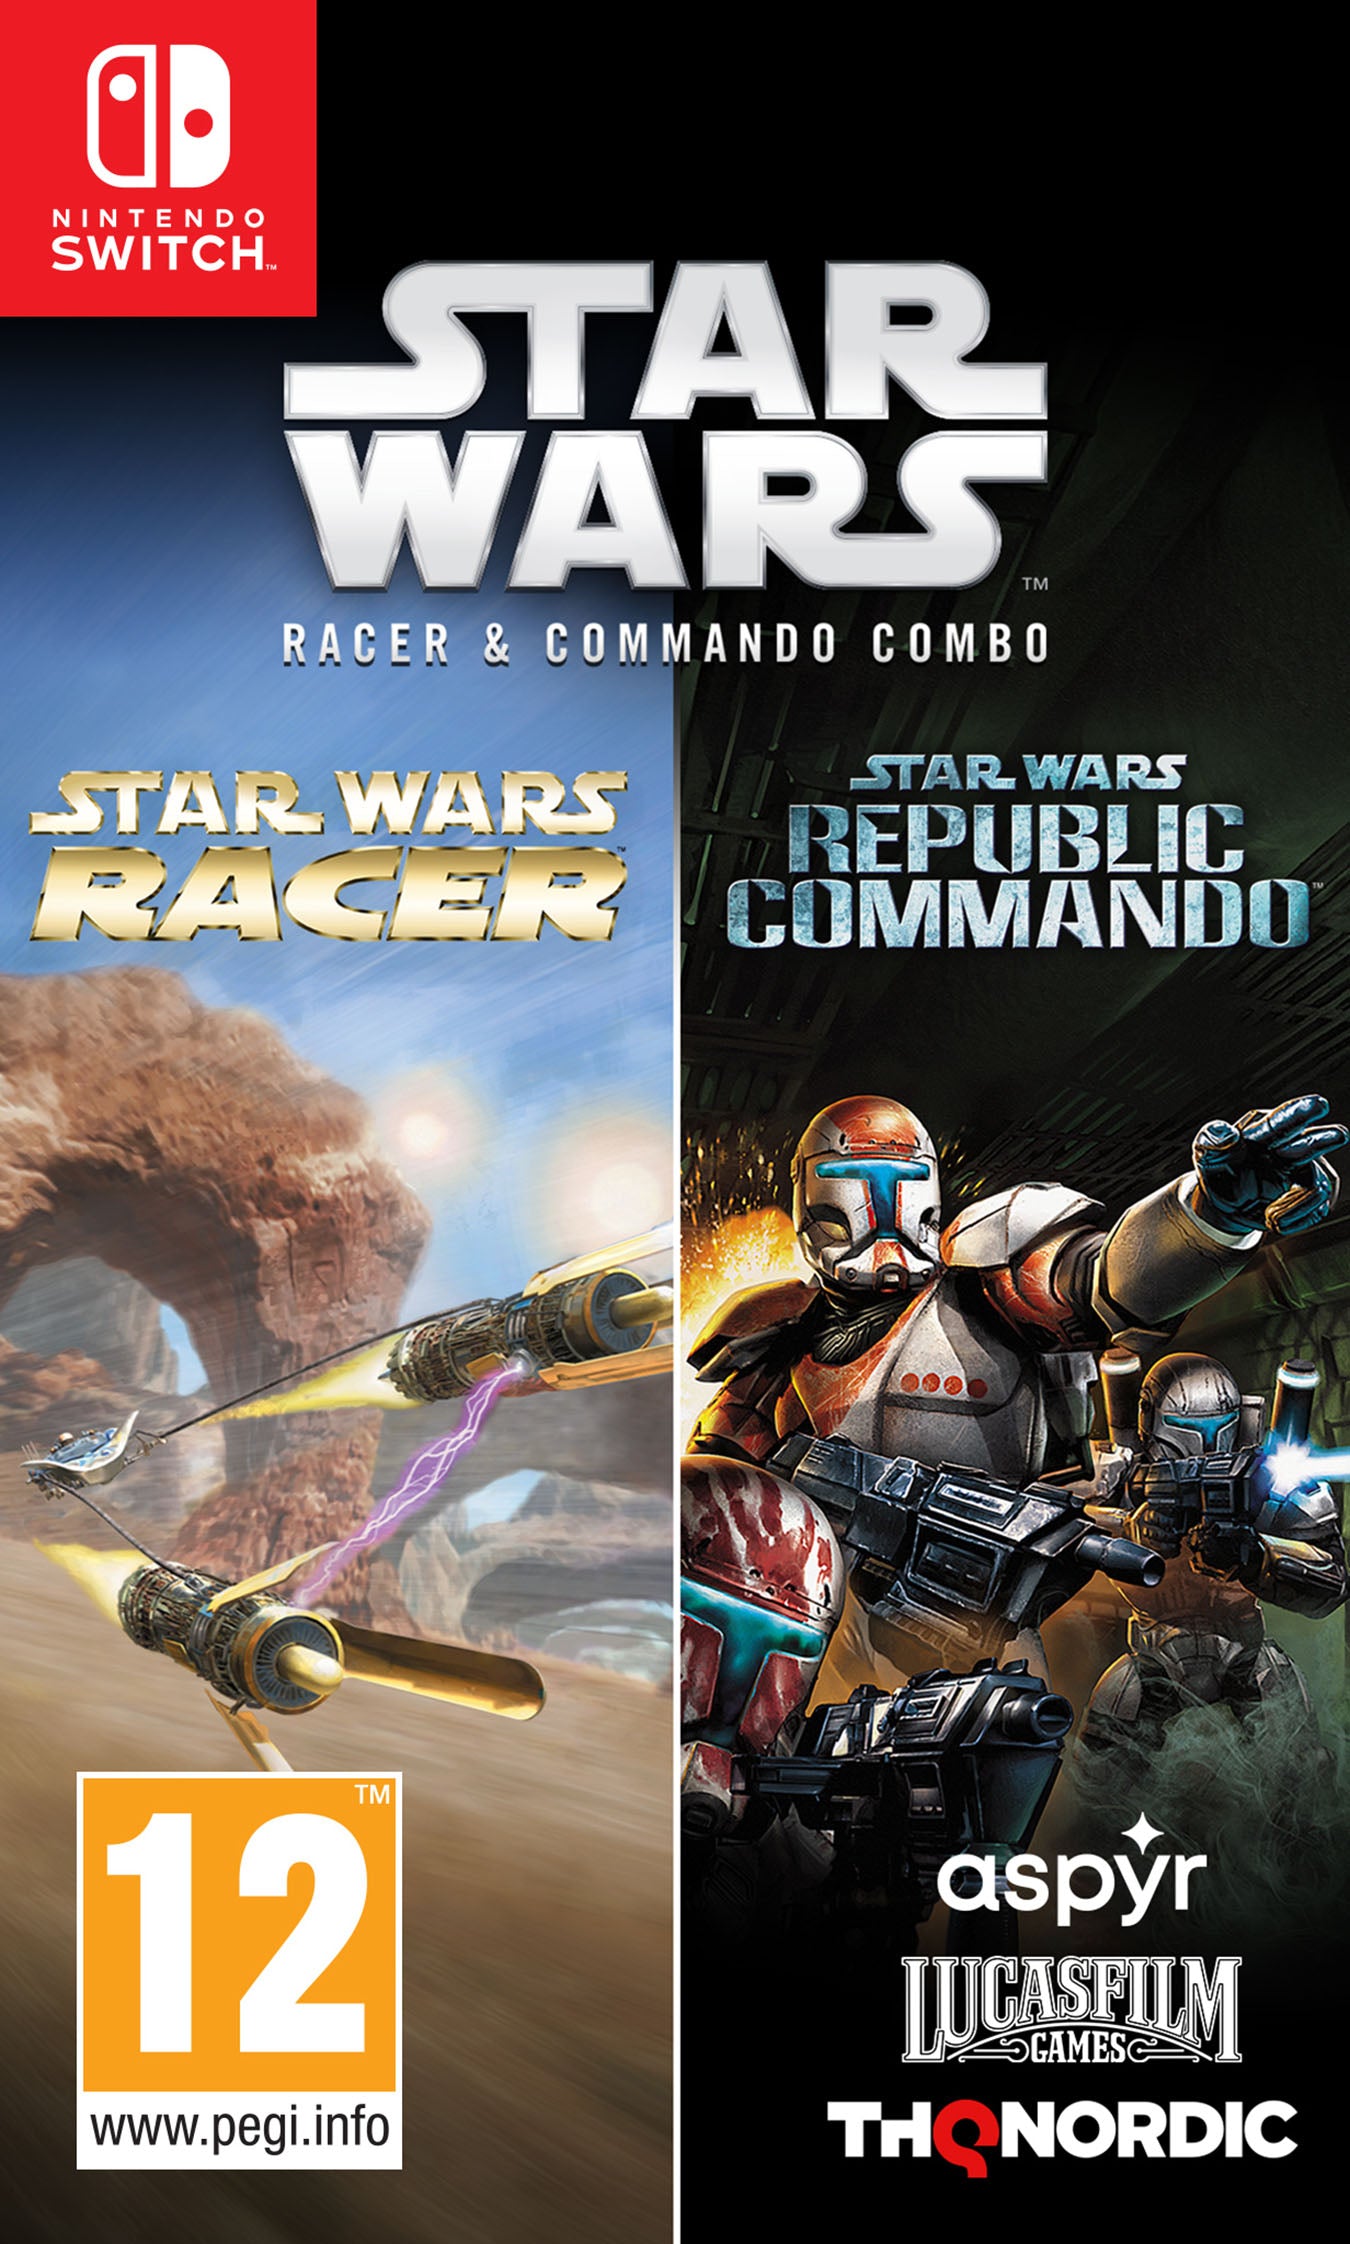 Star Wars Racer Commando Combo